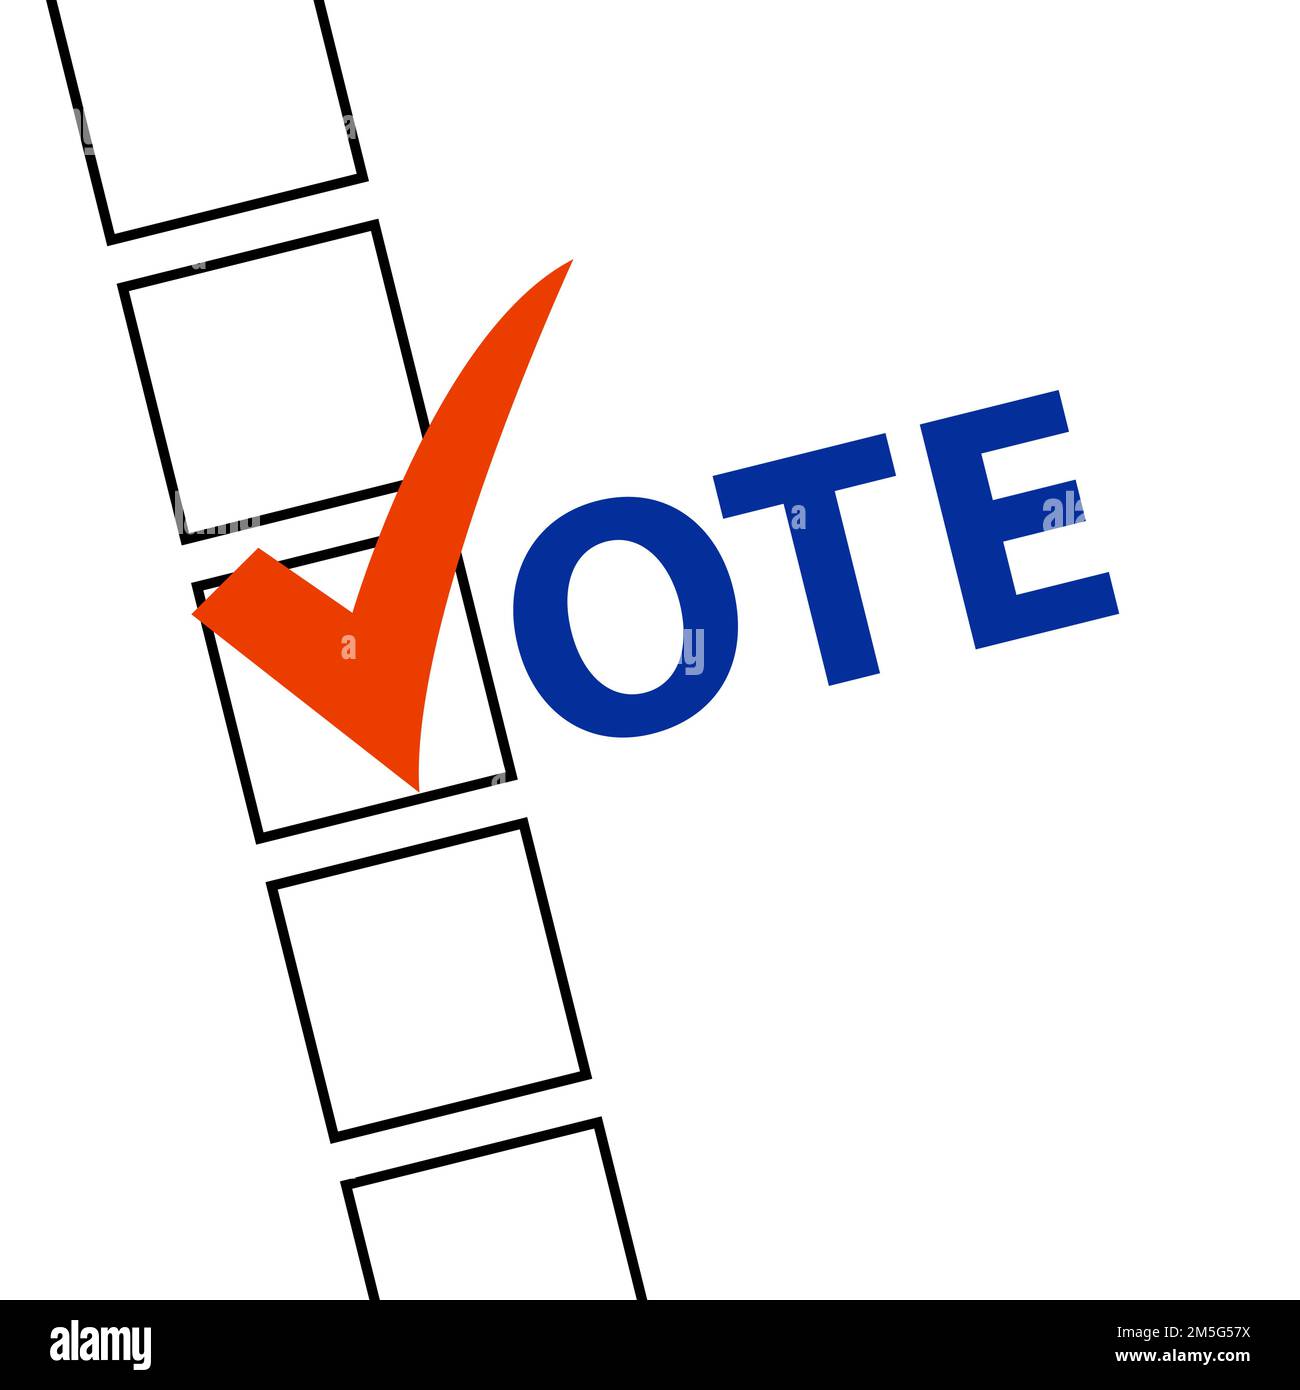 Voting Symbols vector design presidential election 2012 Stock Vector